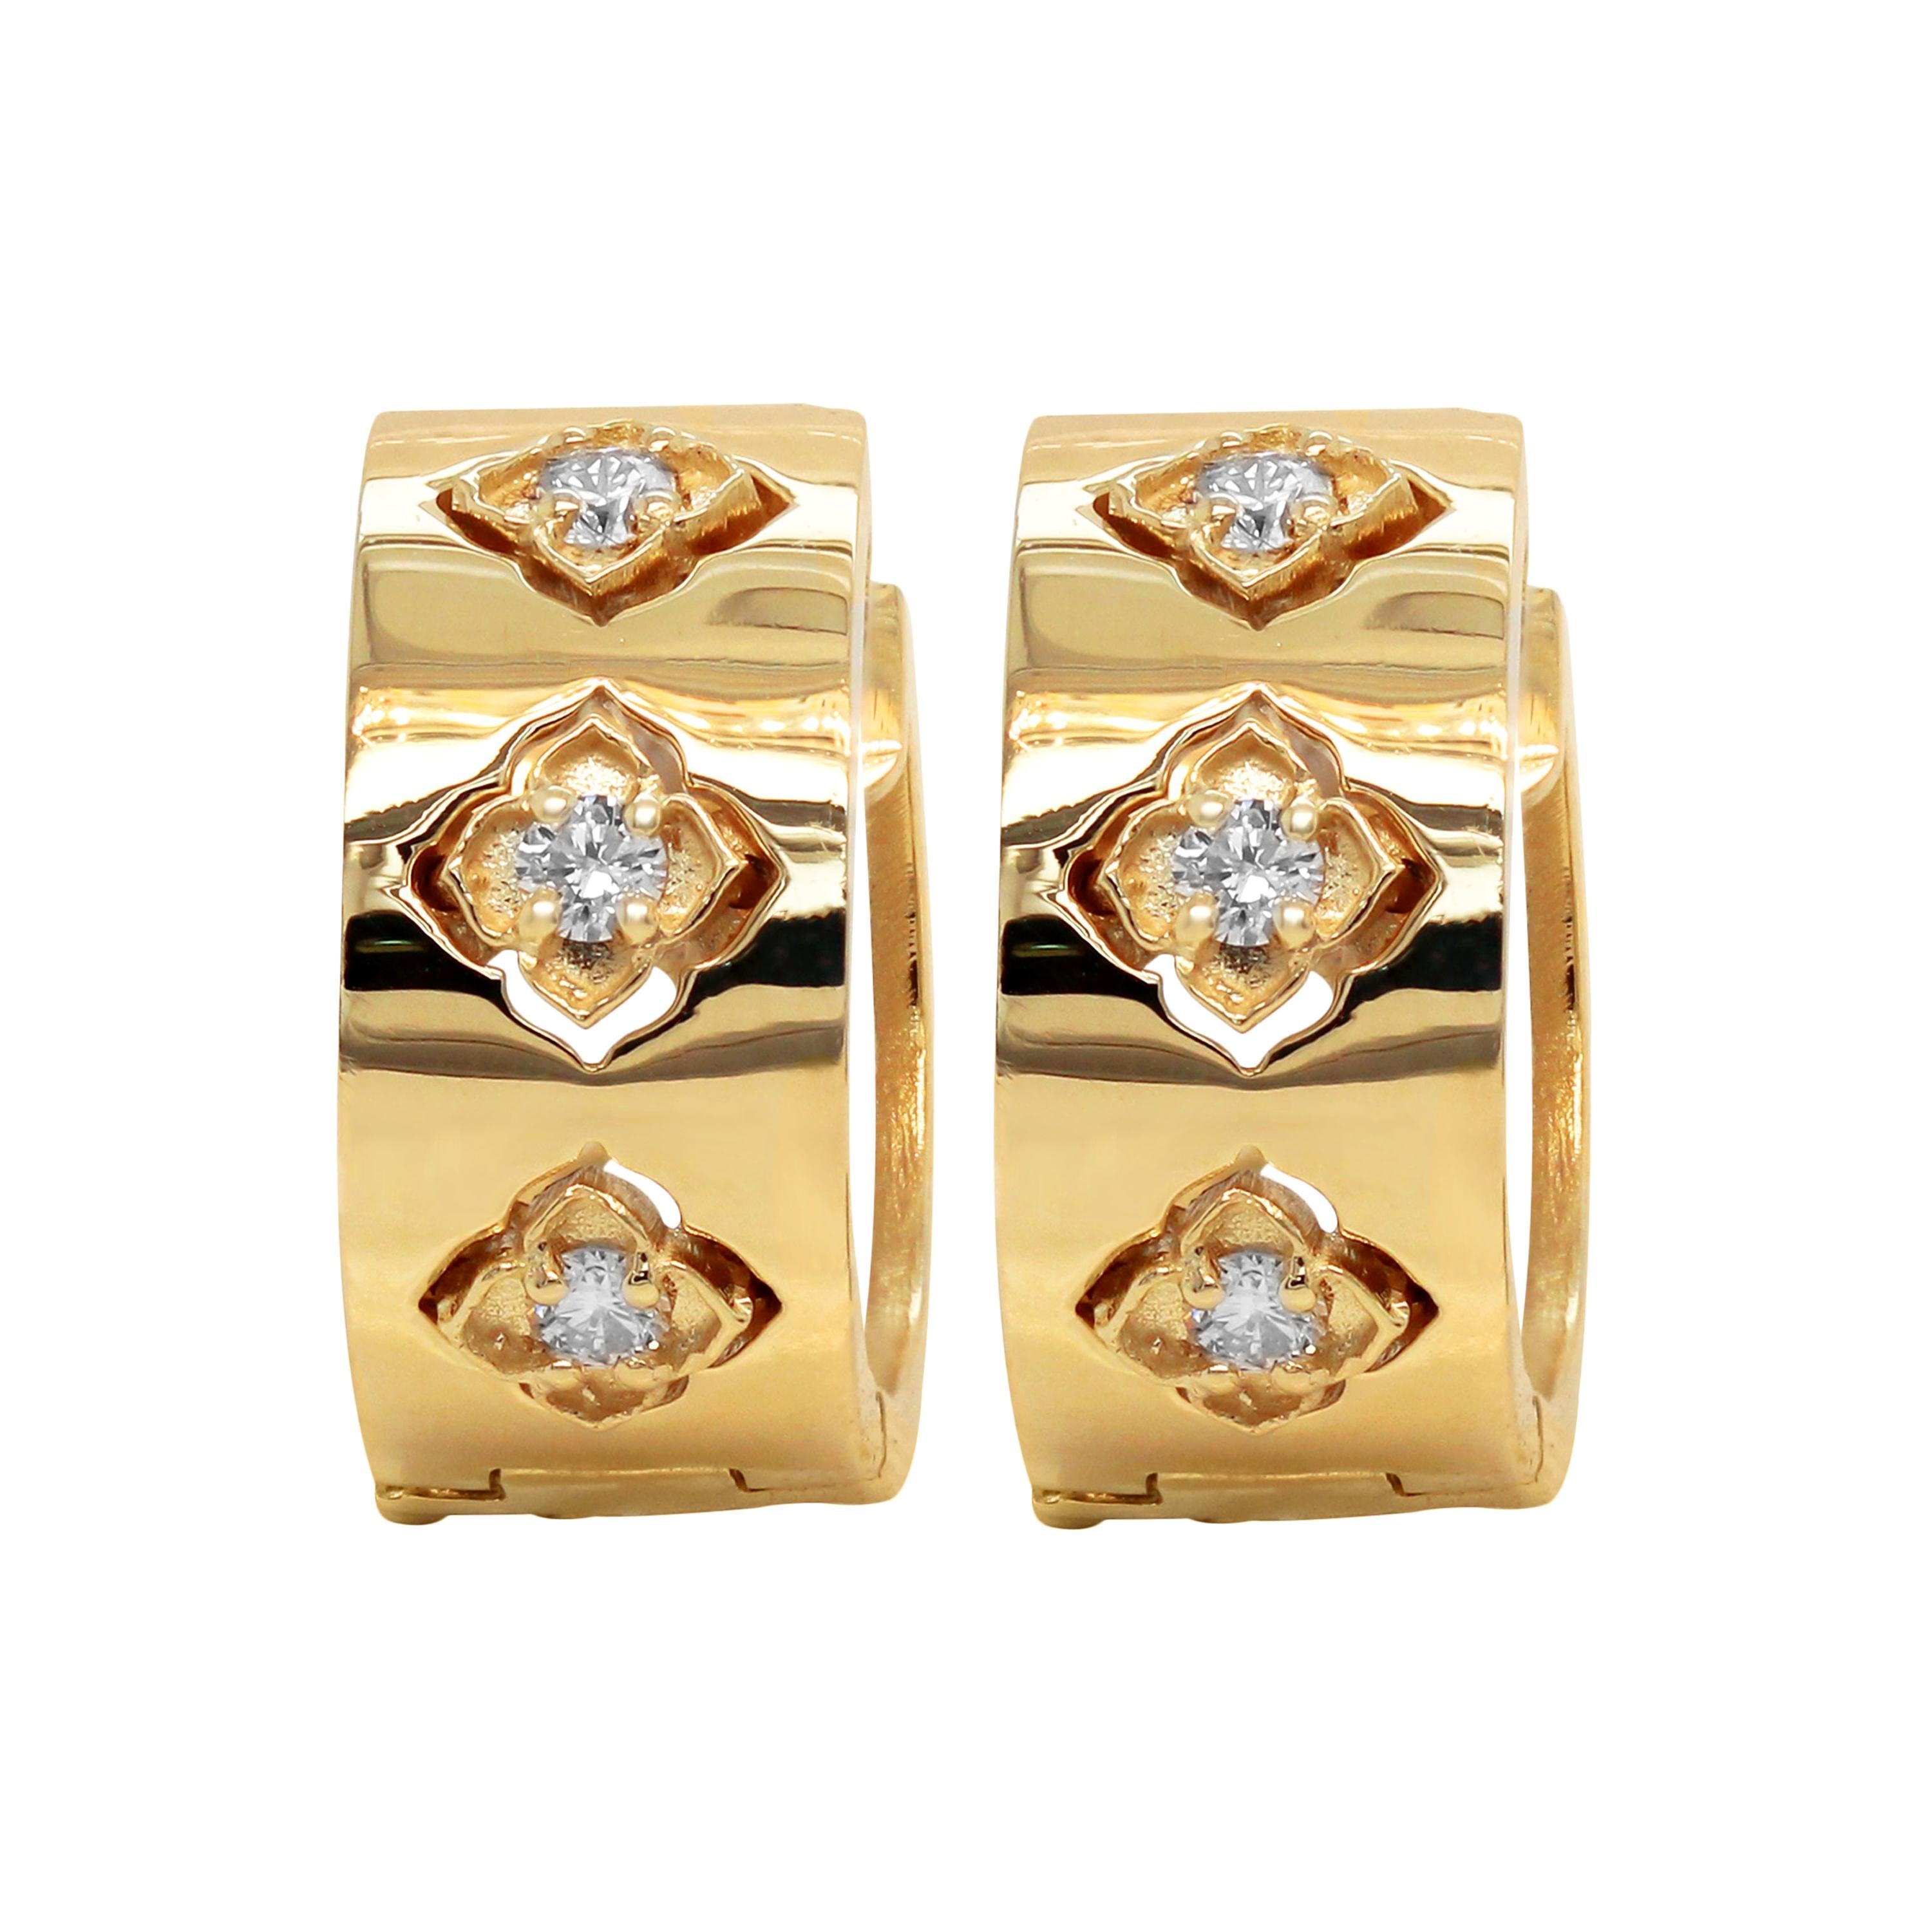 Stambolian 18k High Polished Shiny Yellow Gold Diamond Huggie Earrings